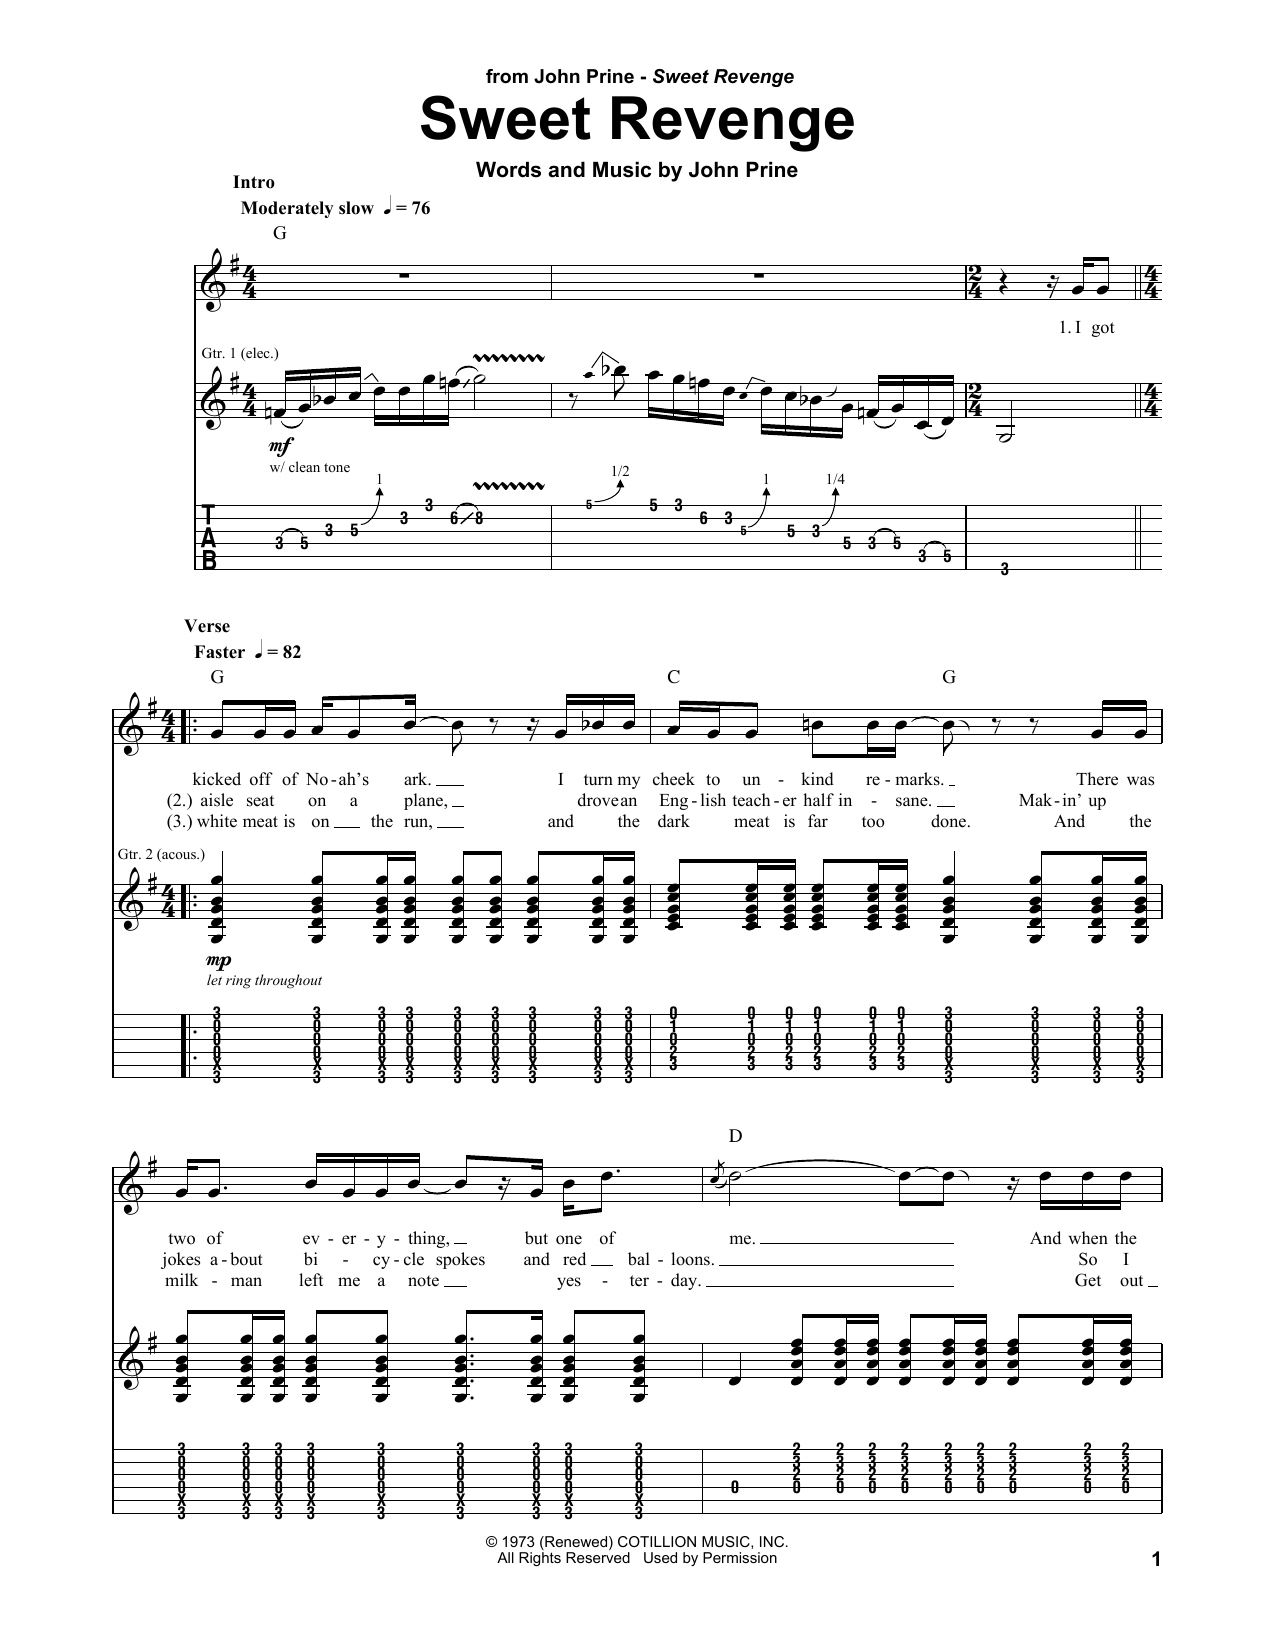 John Prine Sweet Revenge Sheet Music Notes & Chords for Guitar Tab Play-Along - Download or Print PDF